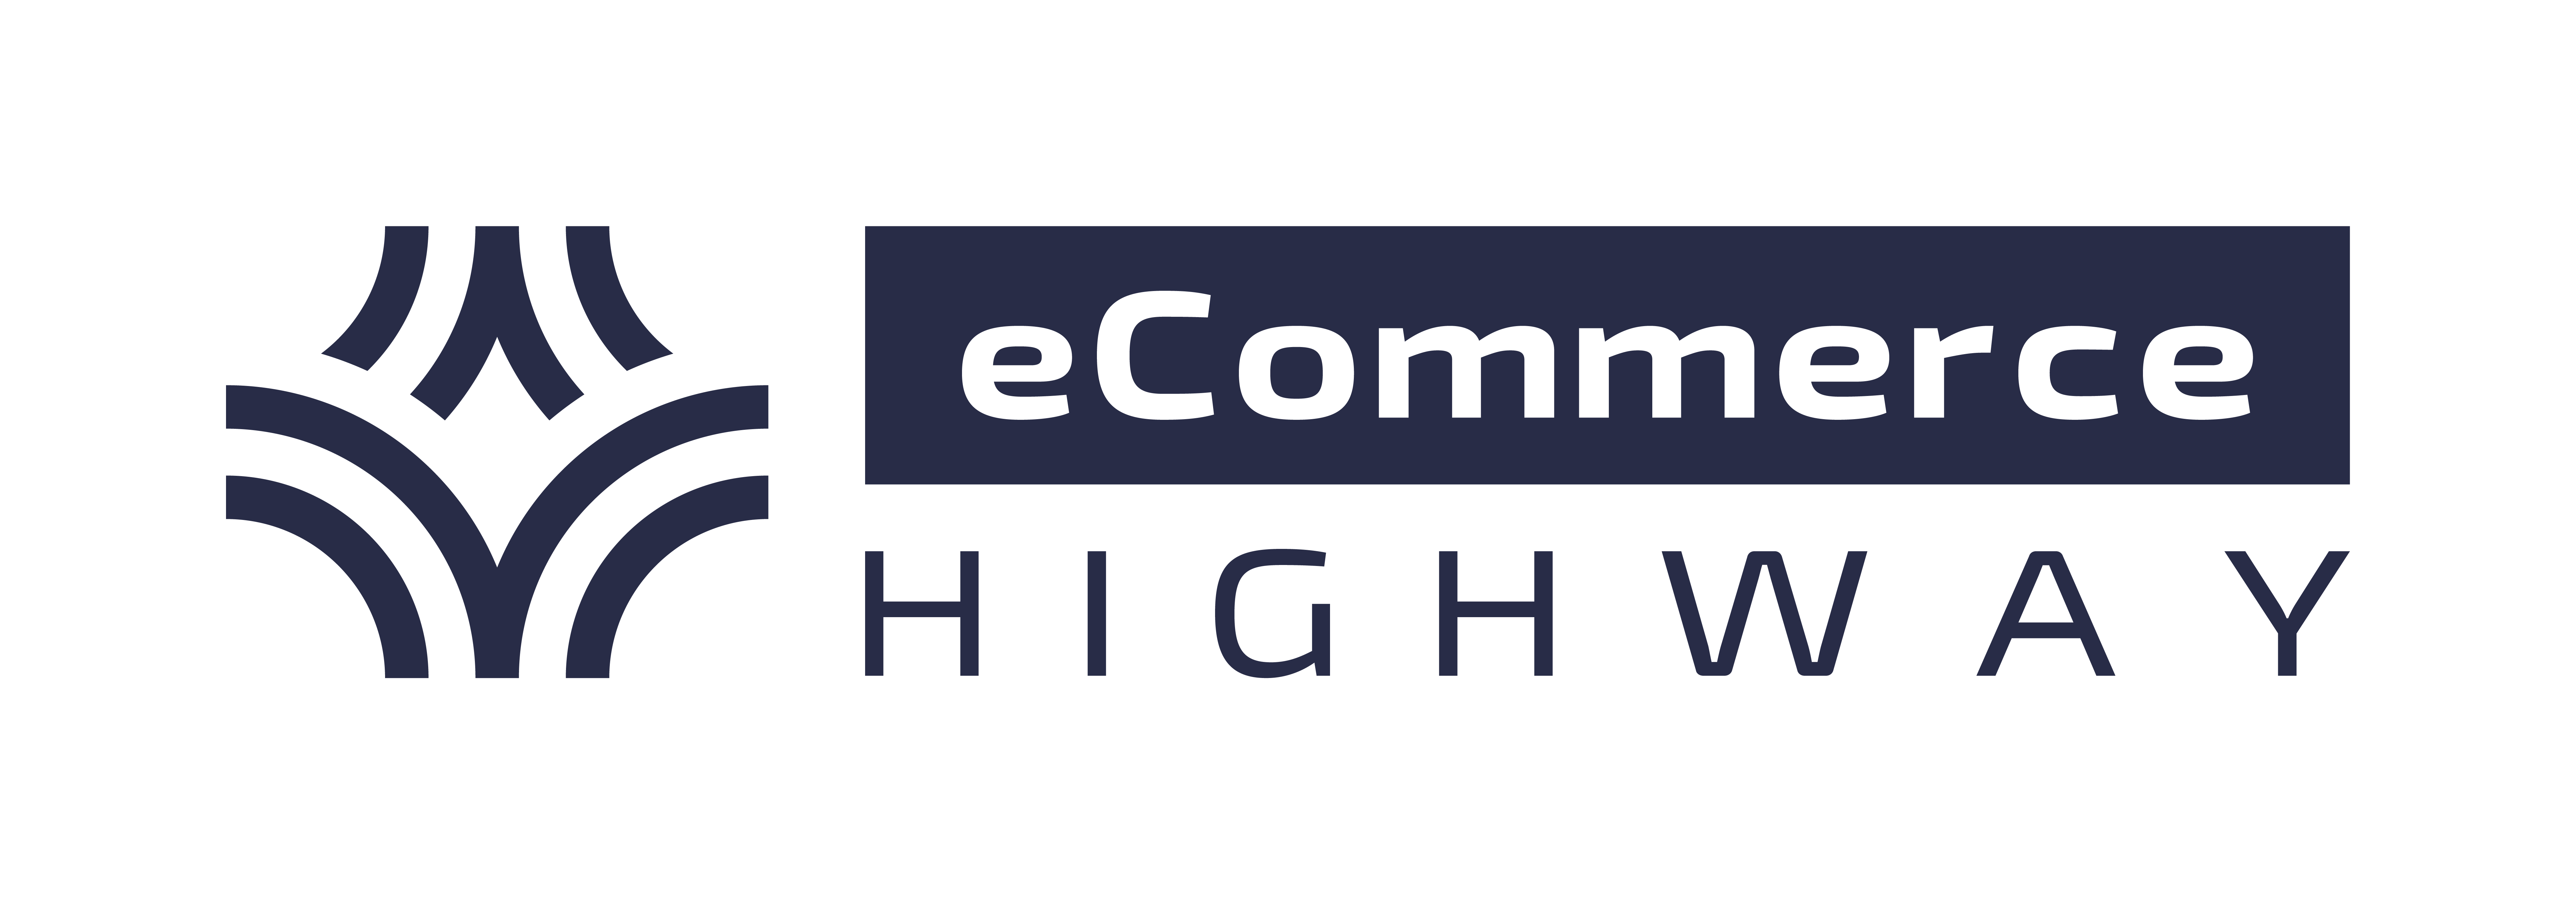 ecommerce highway ab horizontal logo png